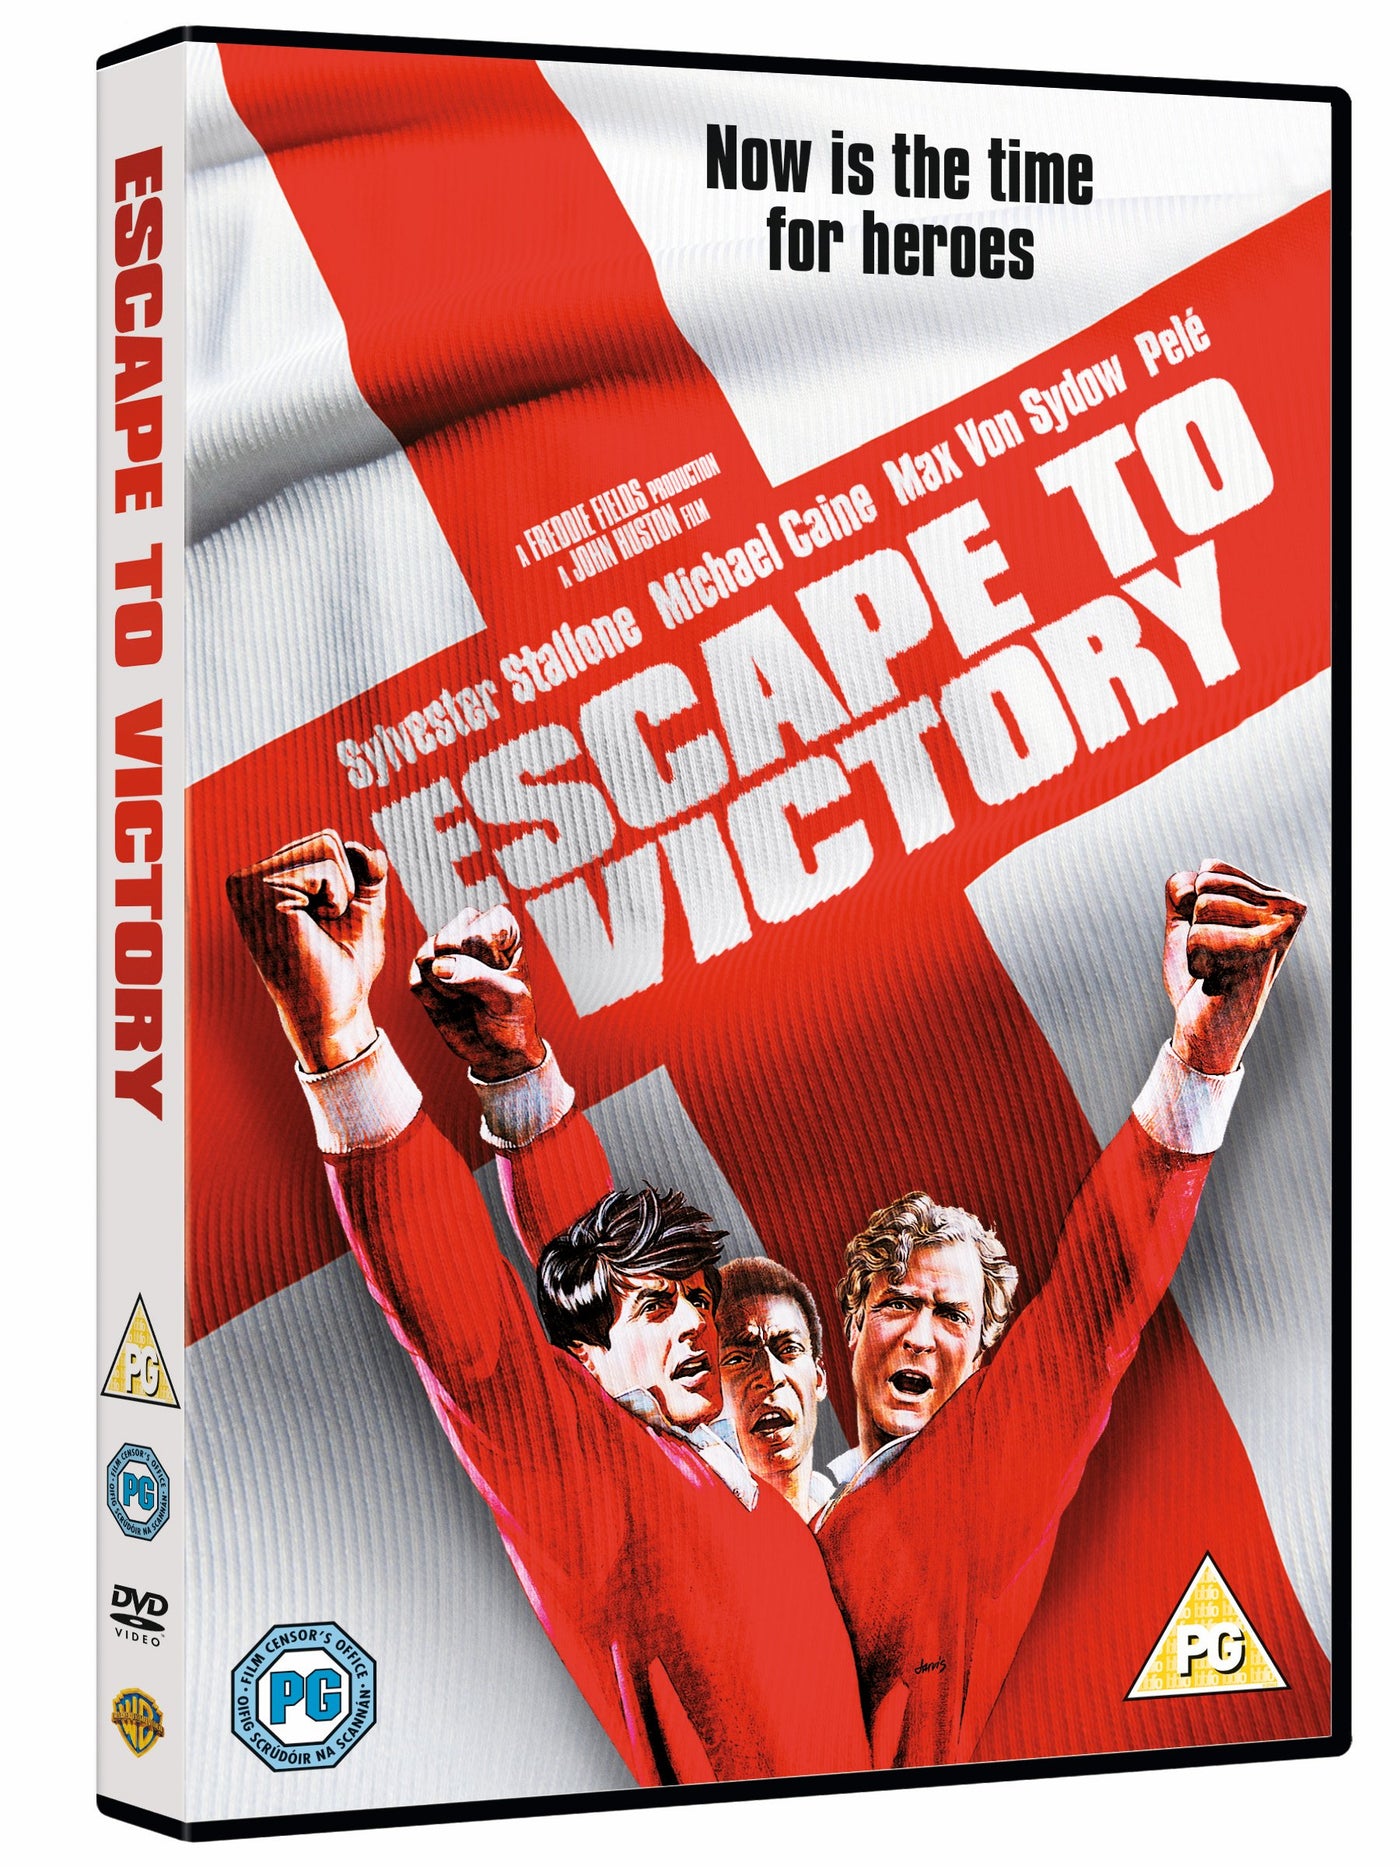 Escape to Victory [1981] (DVD)